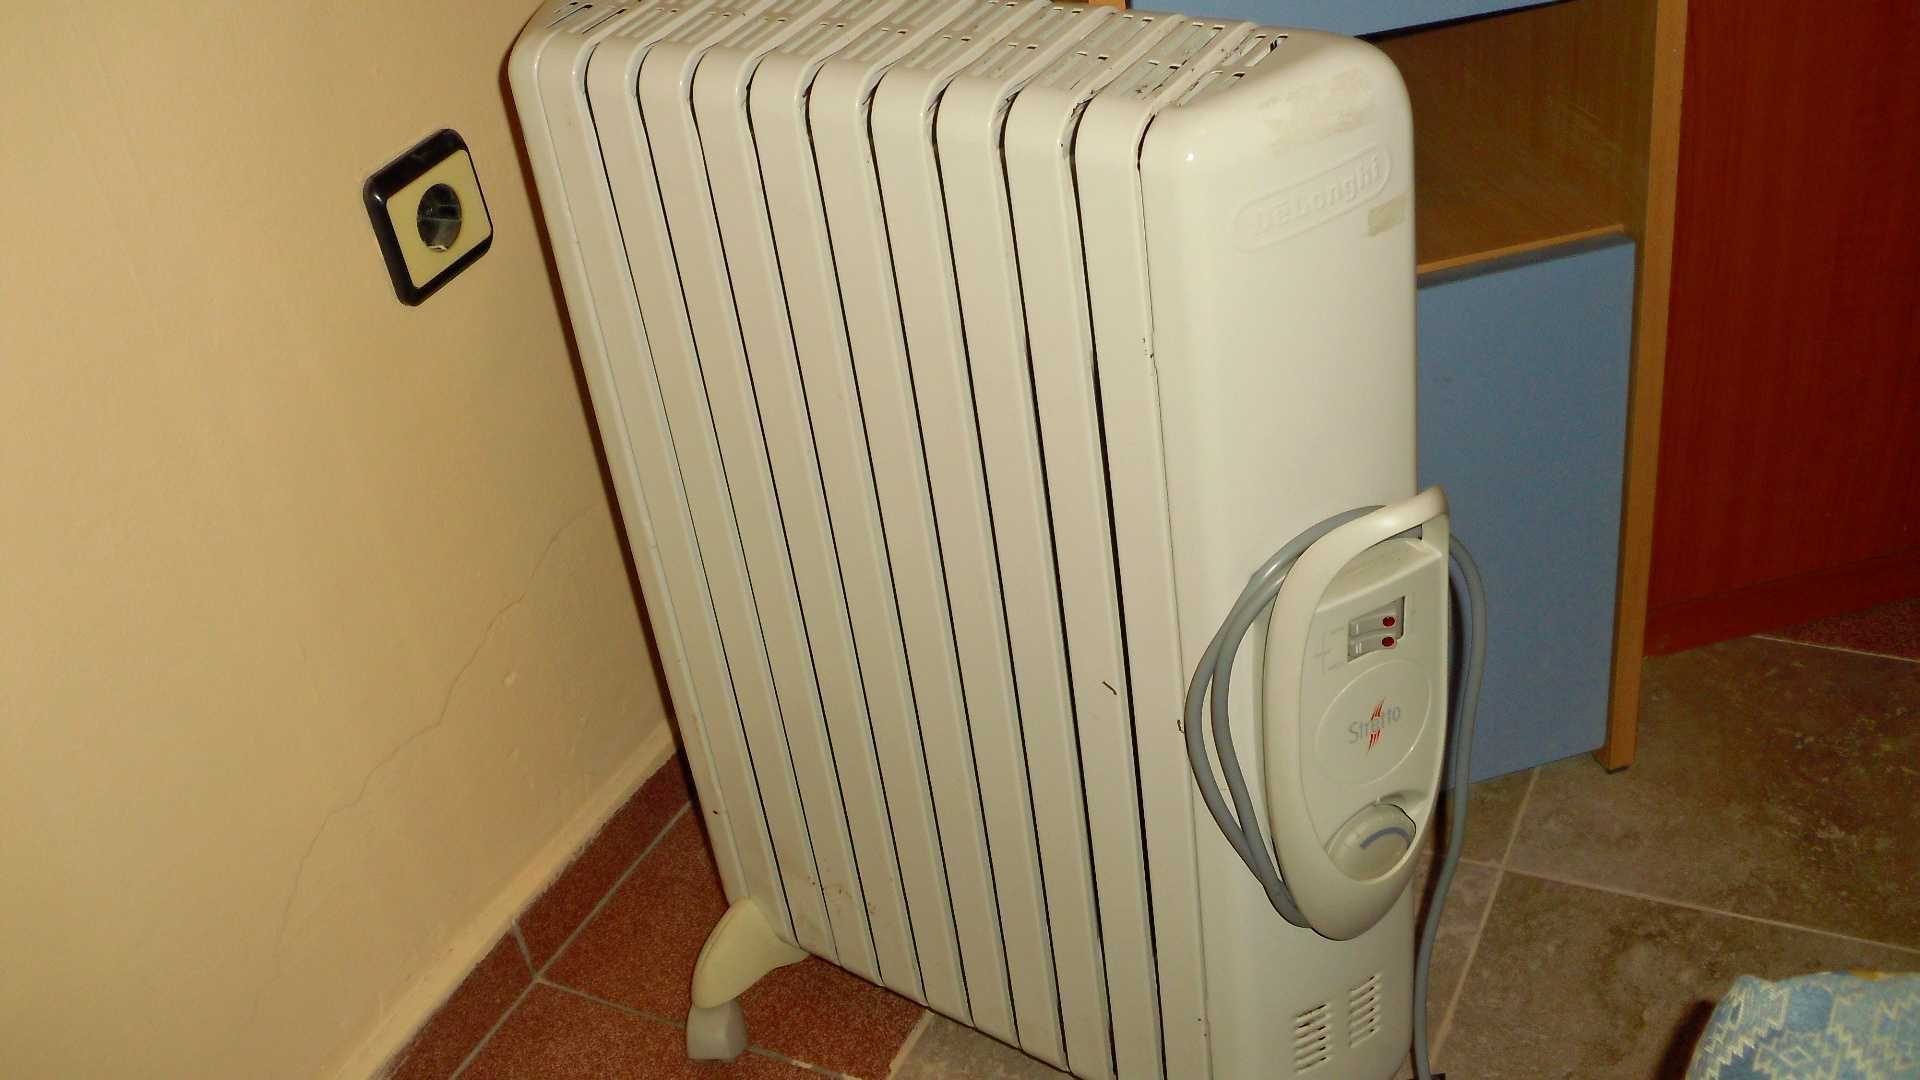 Радиатор за отопление Delonghi - Stretto /Делонги/ 10 ребра